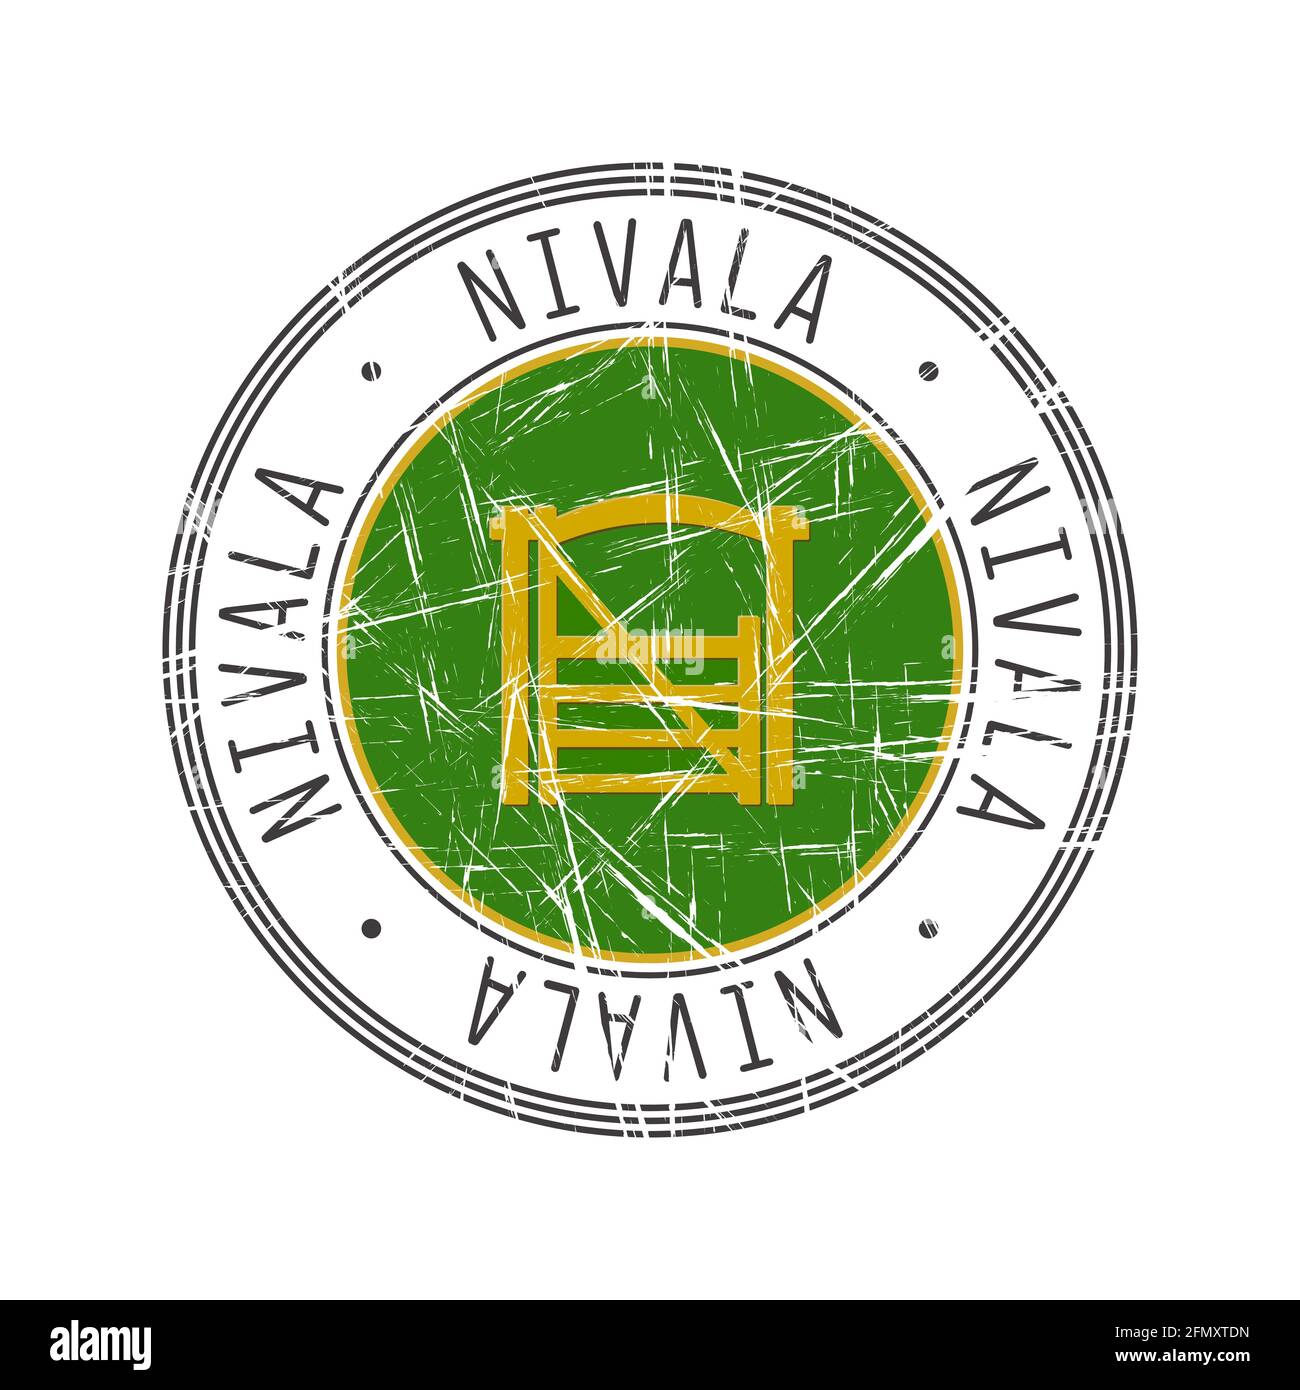 Nivala city, Finland. Grunge postal rubber stamp over white background Stock Vector